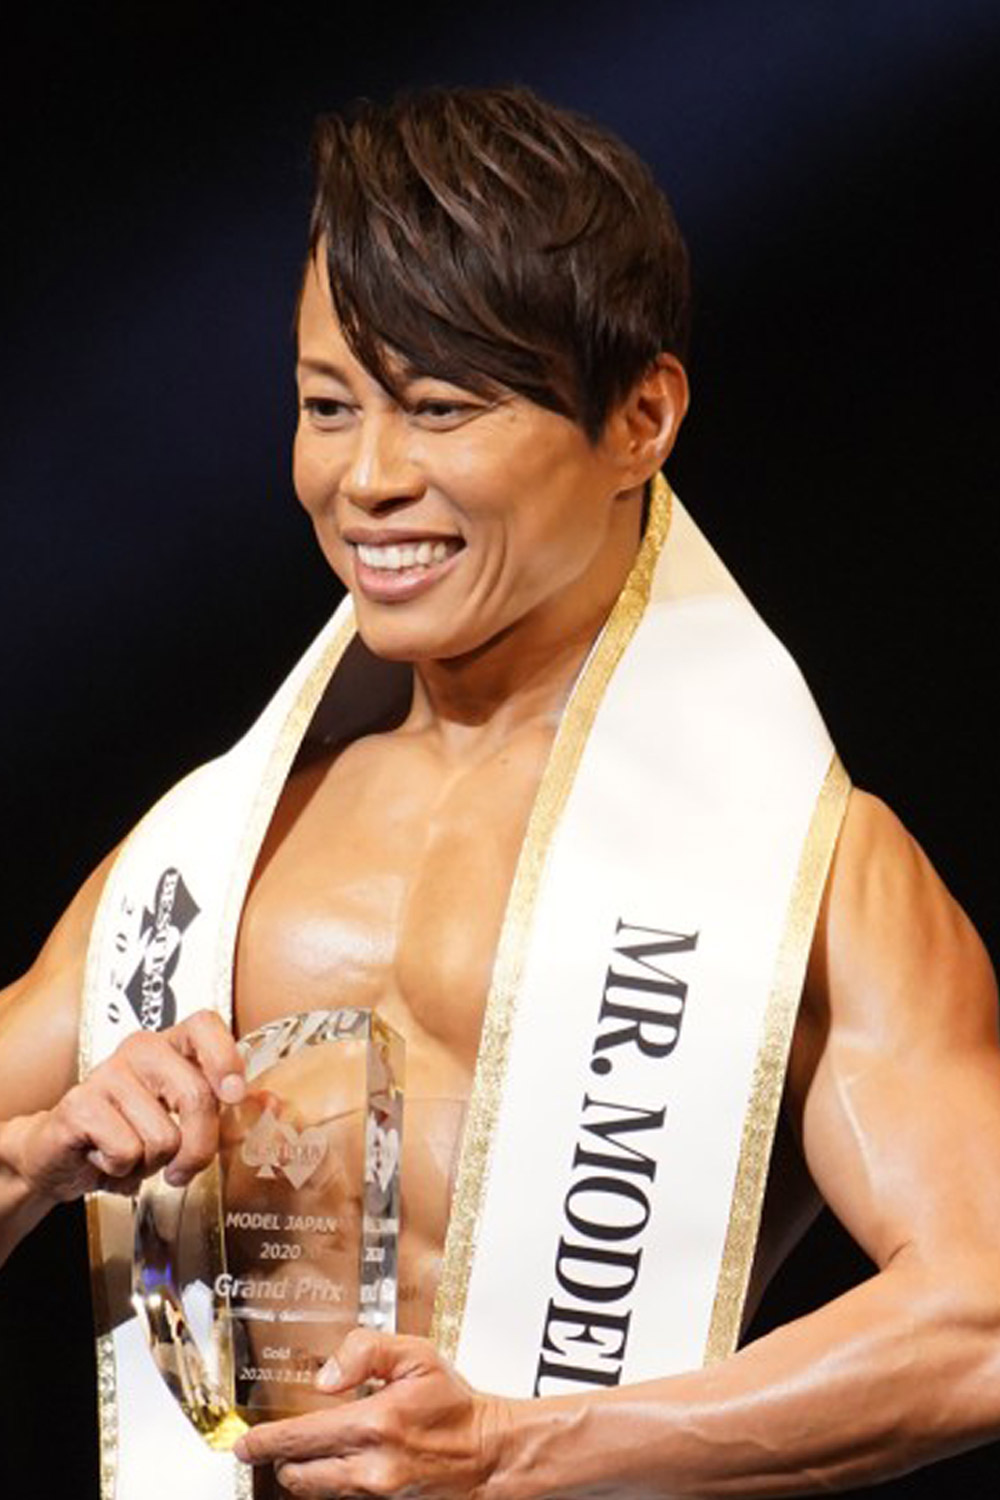 ORICON NEWS发布 “西川贵教” 获得健美大赛冠军 照片插图